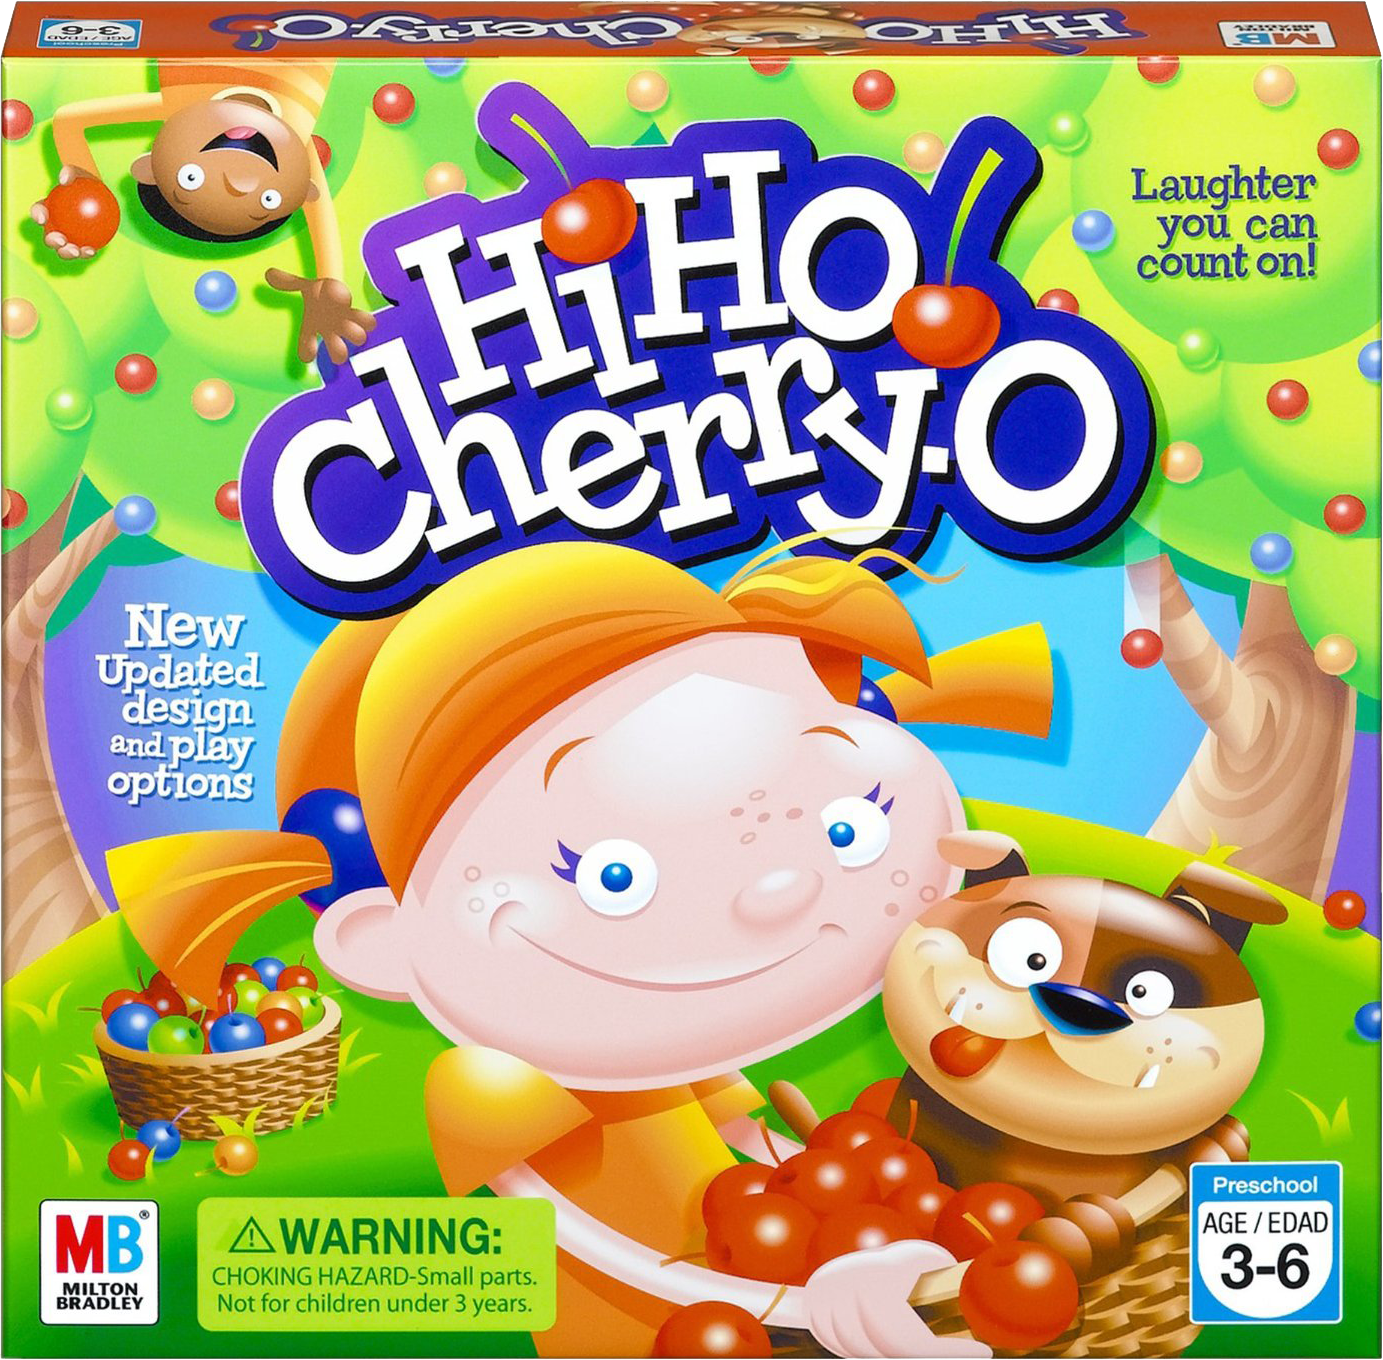 hi-ho cherry-o